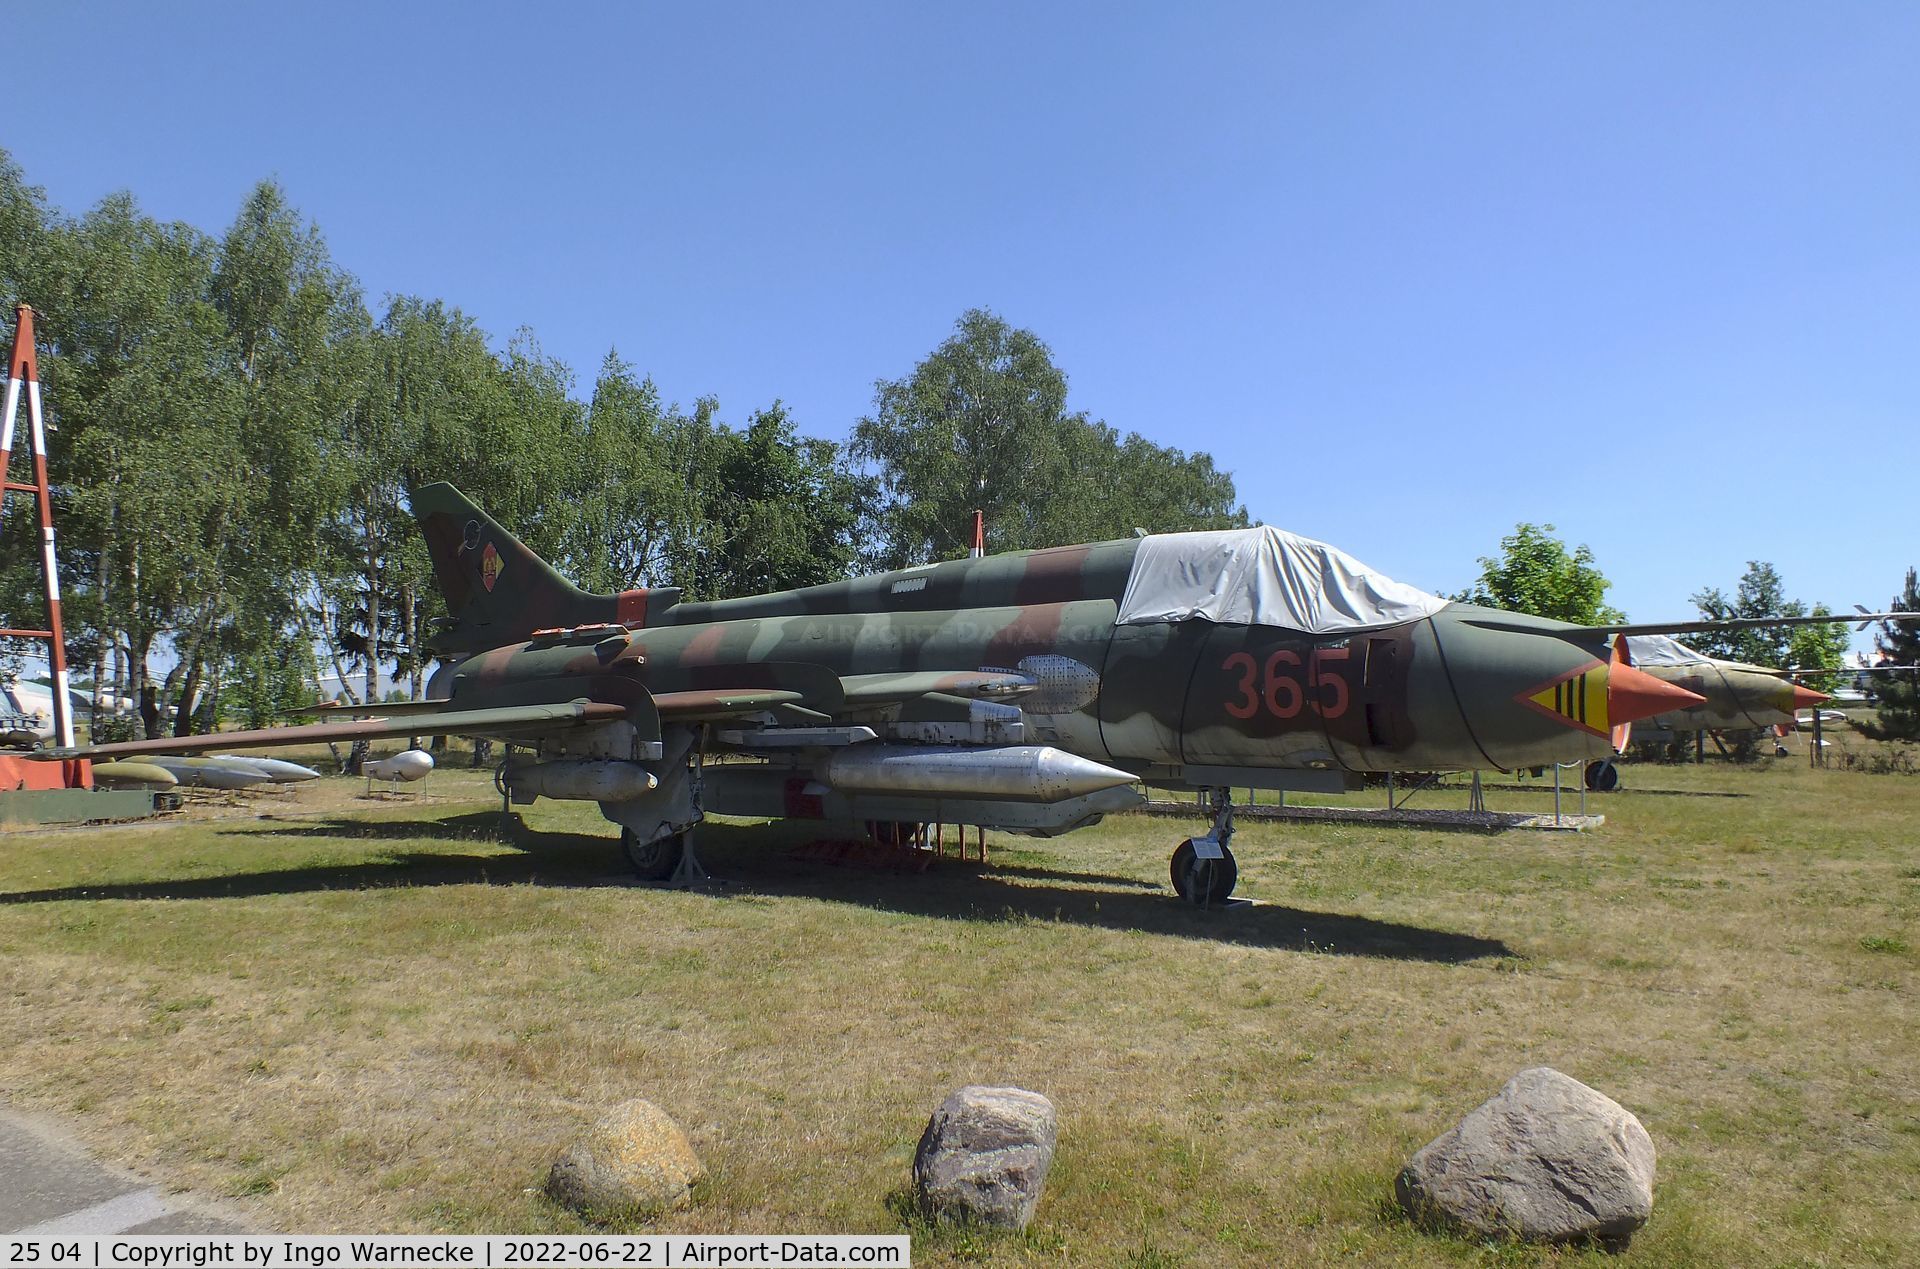 25 04, Sukhoi Su-22M-4 C/N 25511, Sukhoi Su-22M-4 FITTER-K (with recce and electronic warfare pods) at the Flugplatzmuseum Cottbus (Cottbus airfield museum)